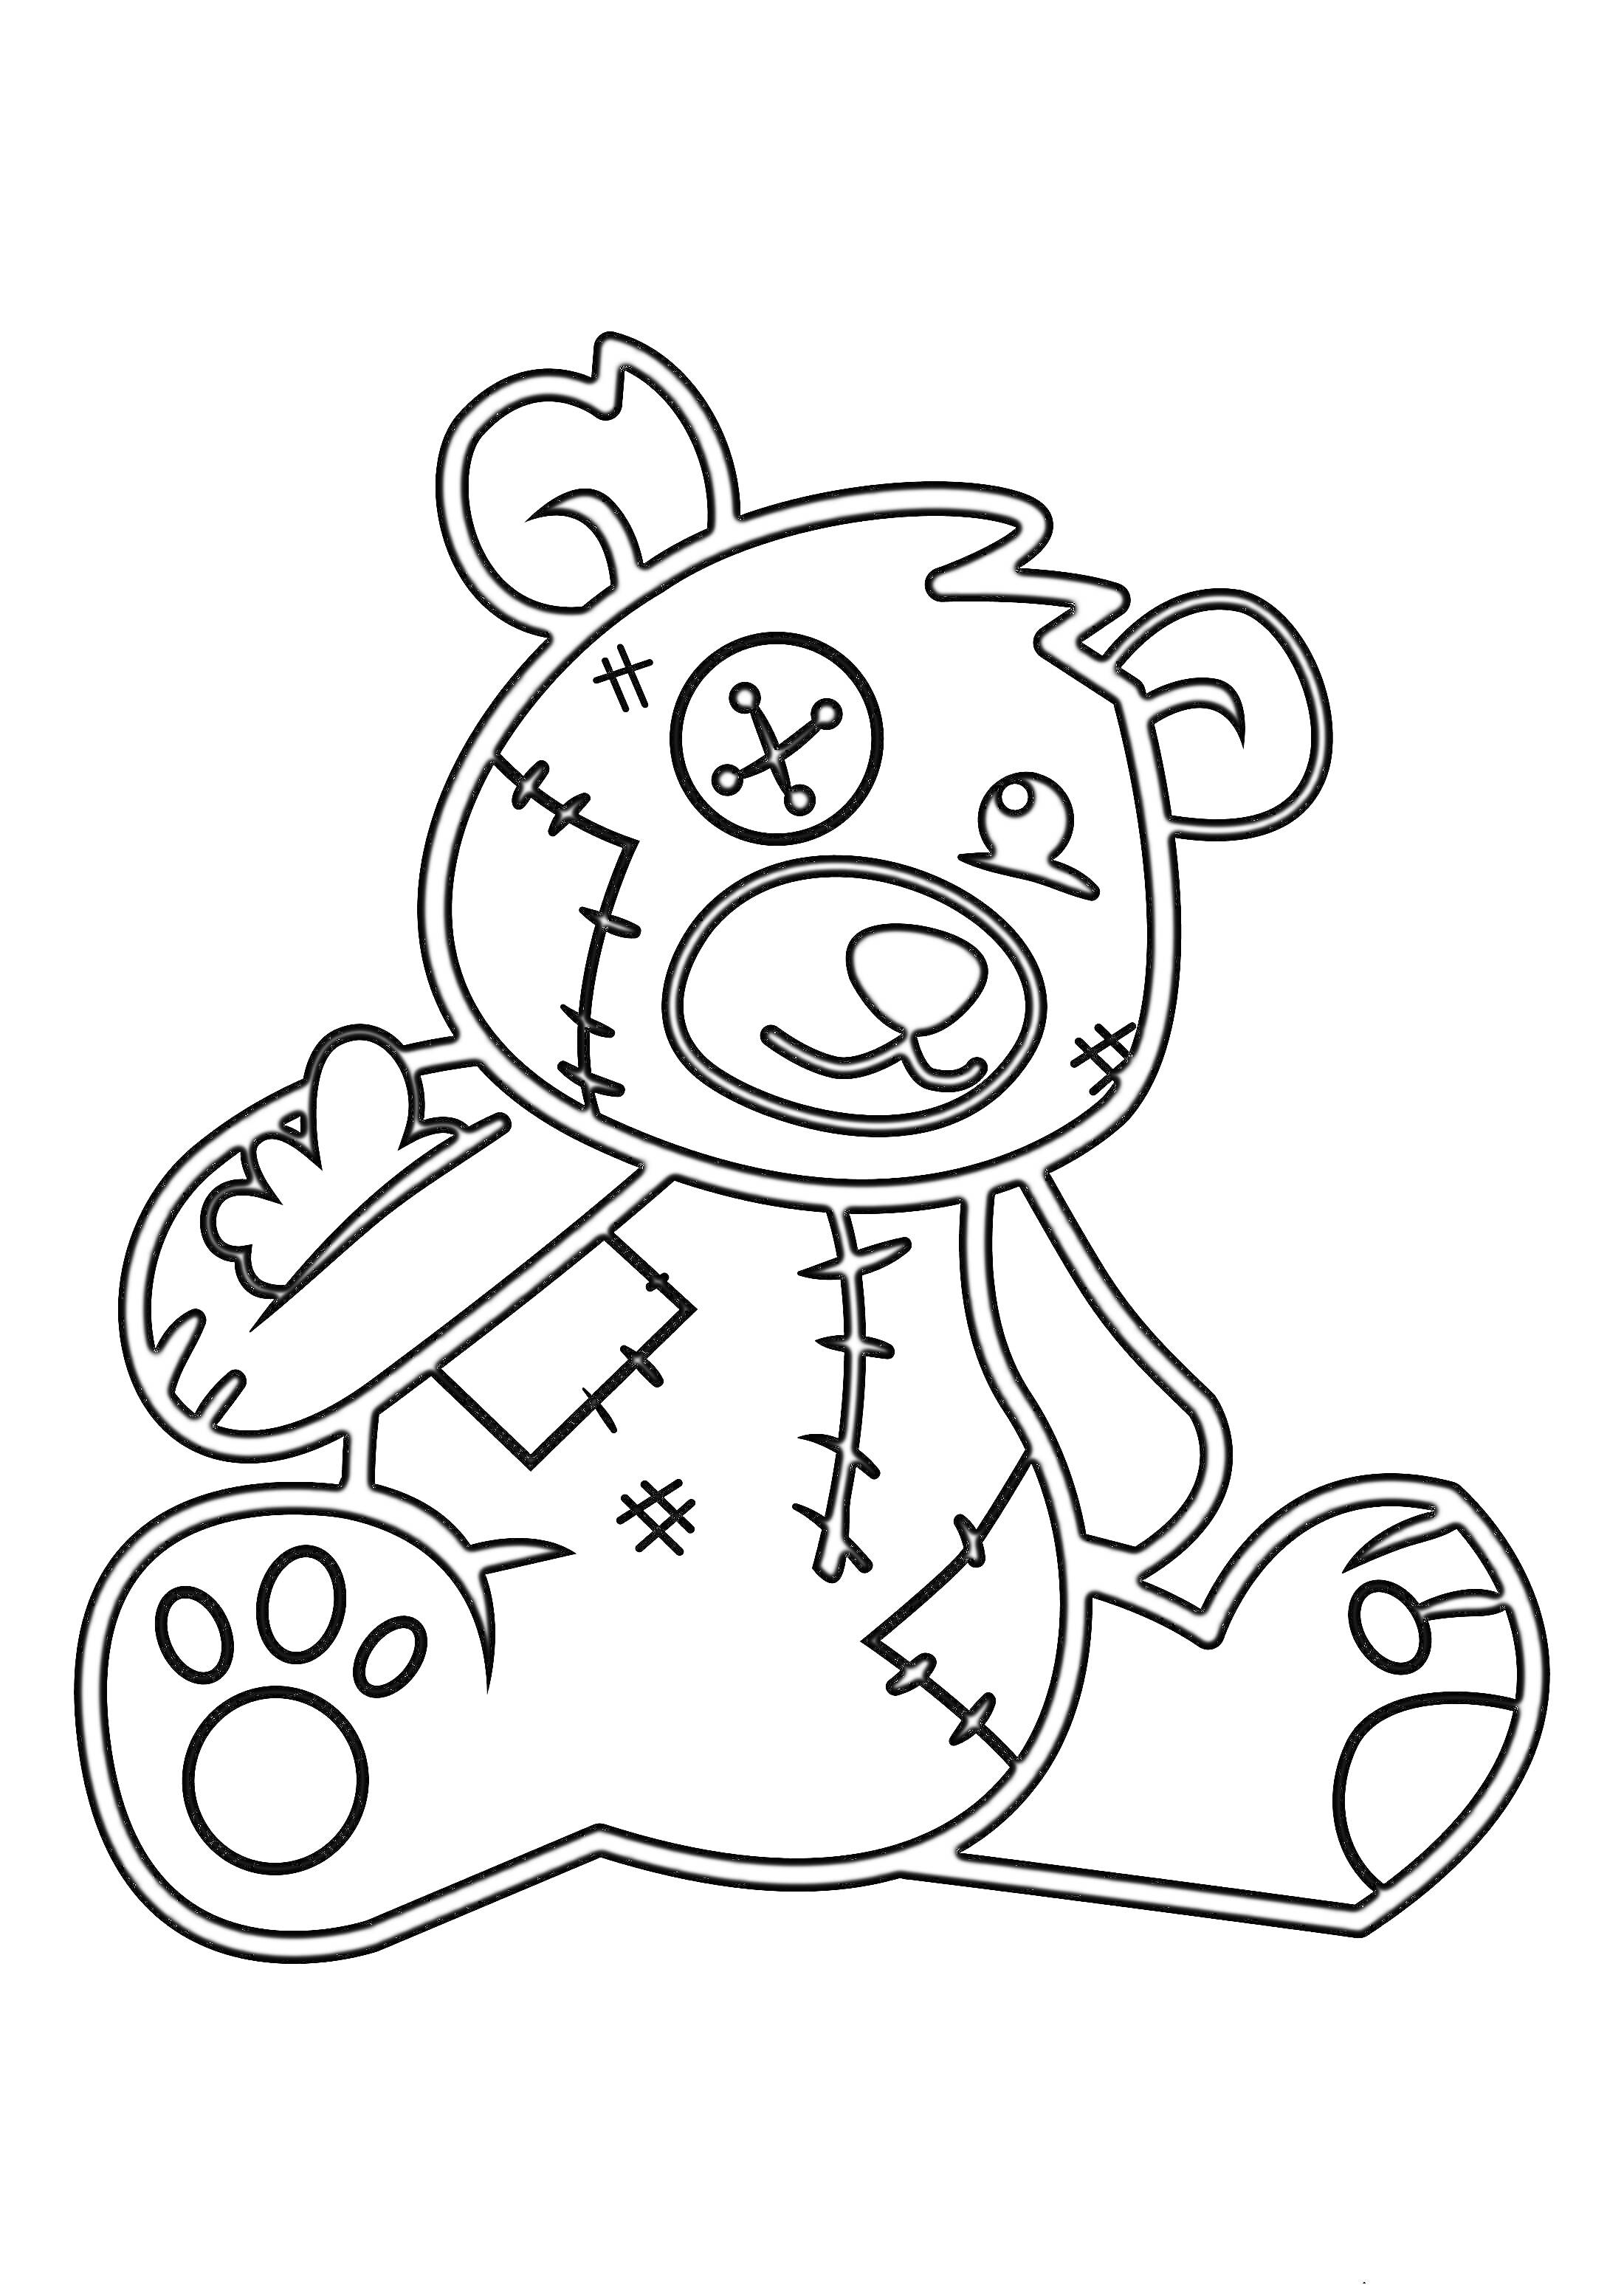 Раскраска Мишка с заплатками и пуговицей вместо глаза, сидящий, с лапами предъявленными вперёд, с прострочками на теле